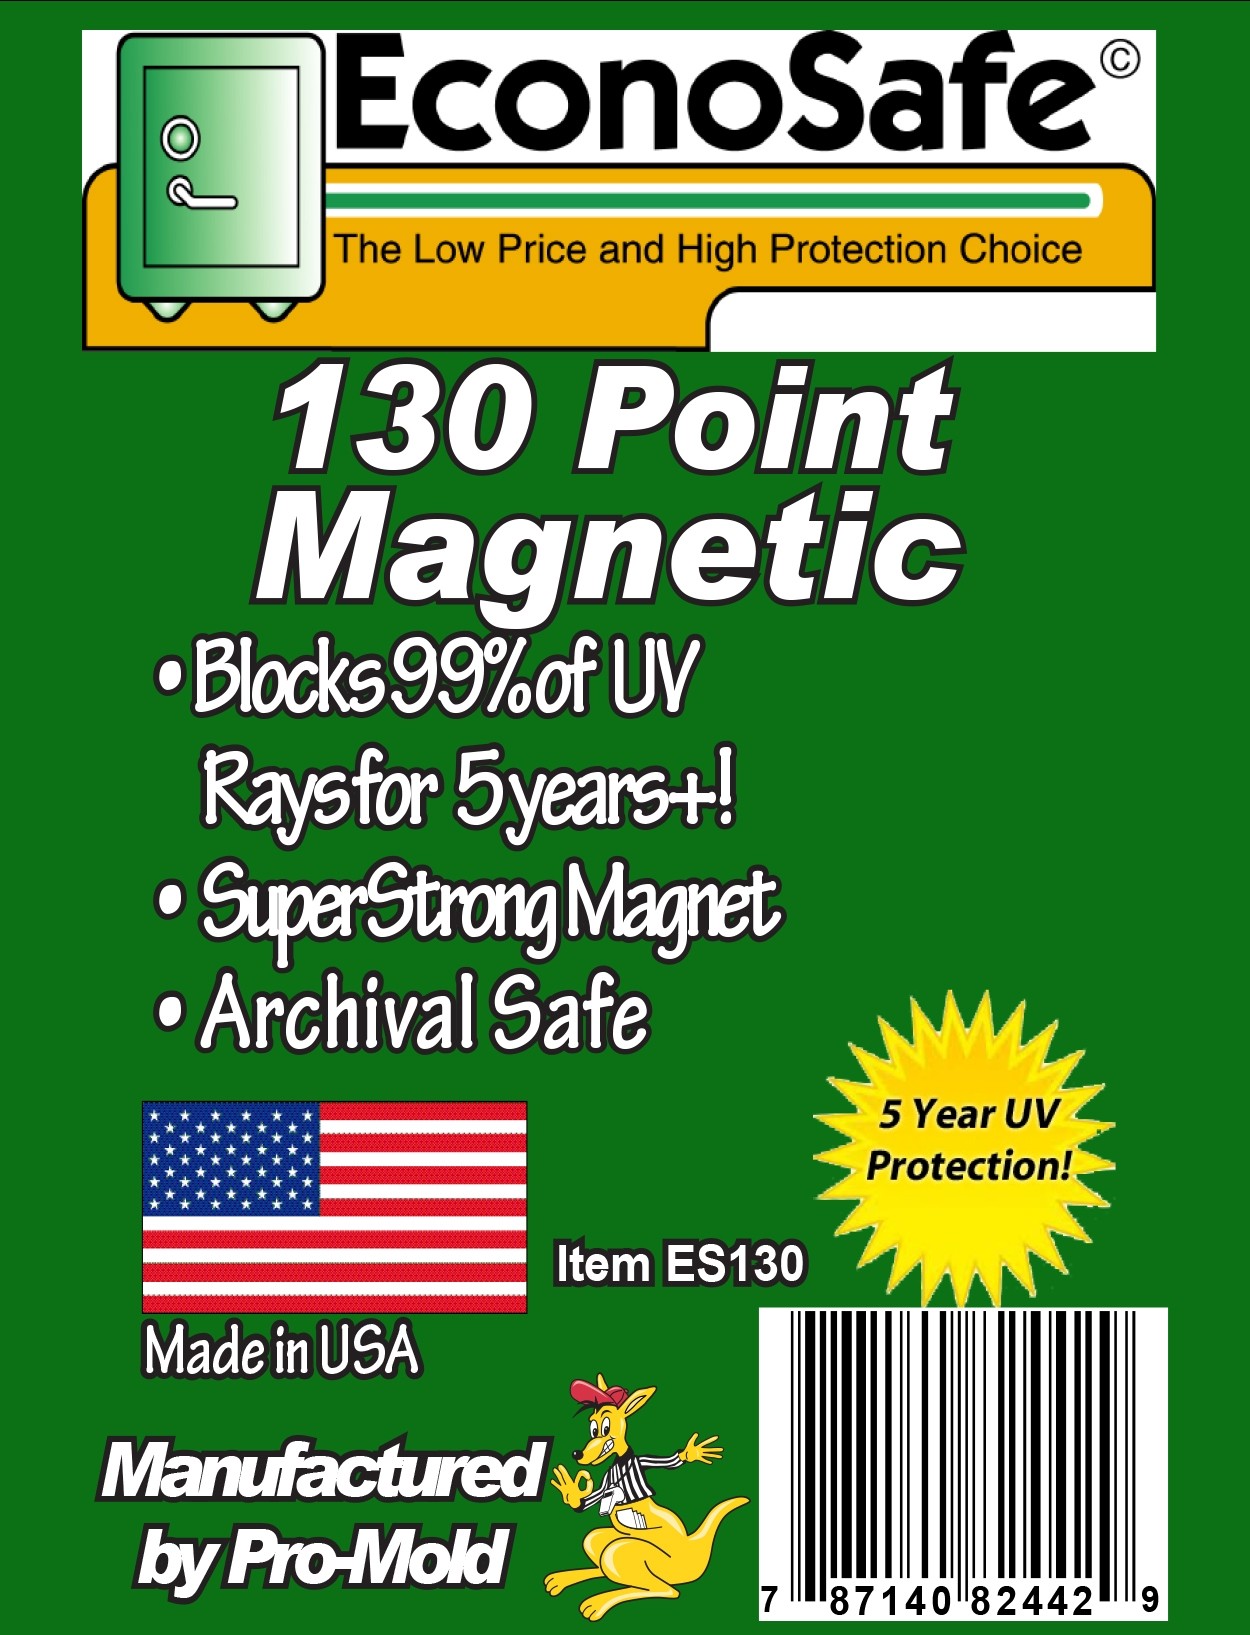 EconoSafe Magnetic 2nd Generation - 130 Point